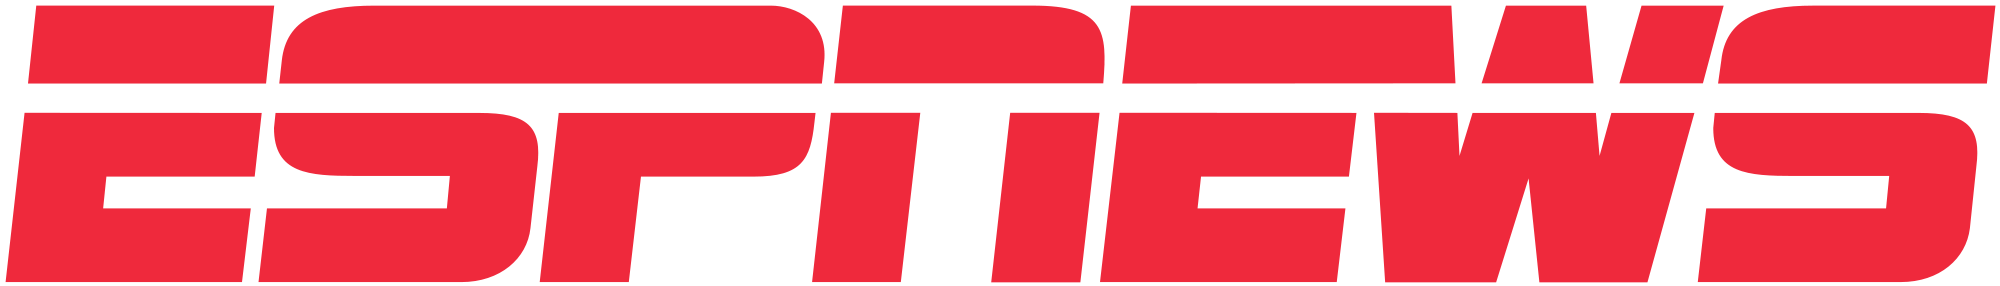 ESPNews Logo - ESPNews